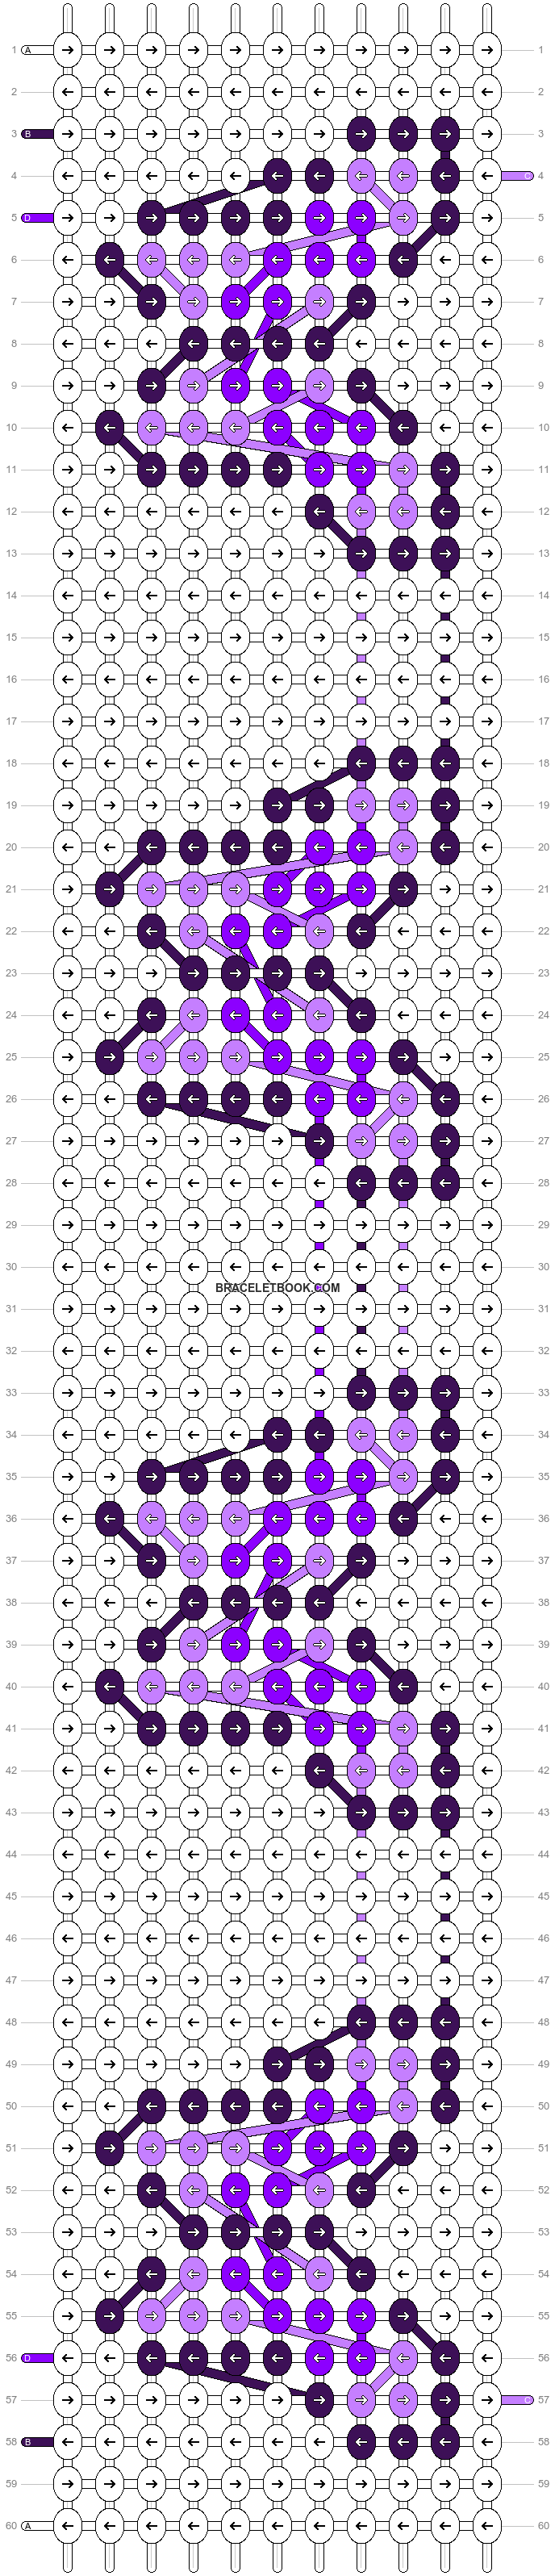 Alpha pattern #34447 variation #28491 pattern